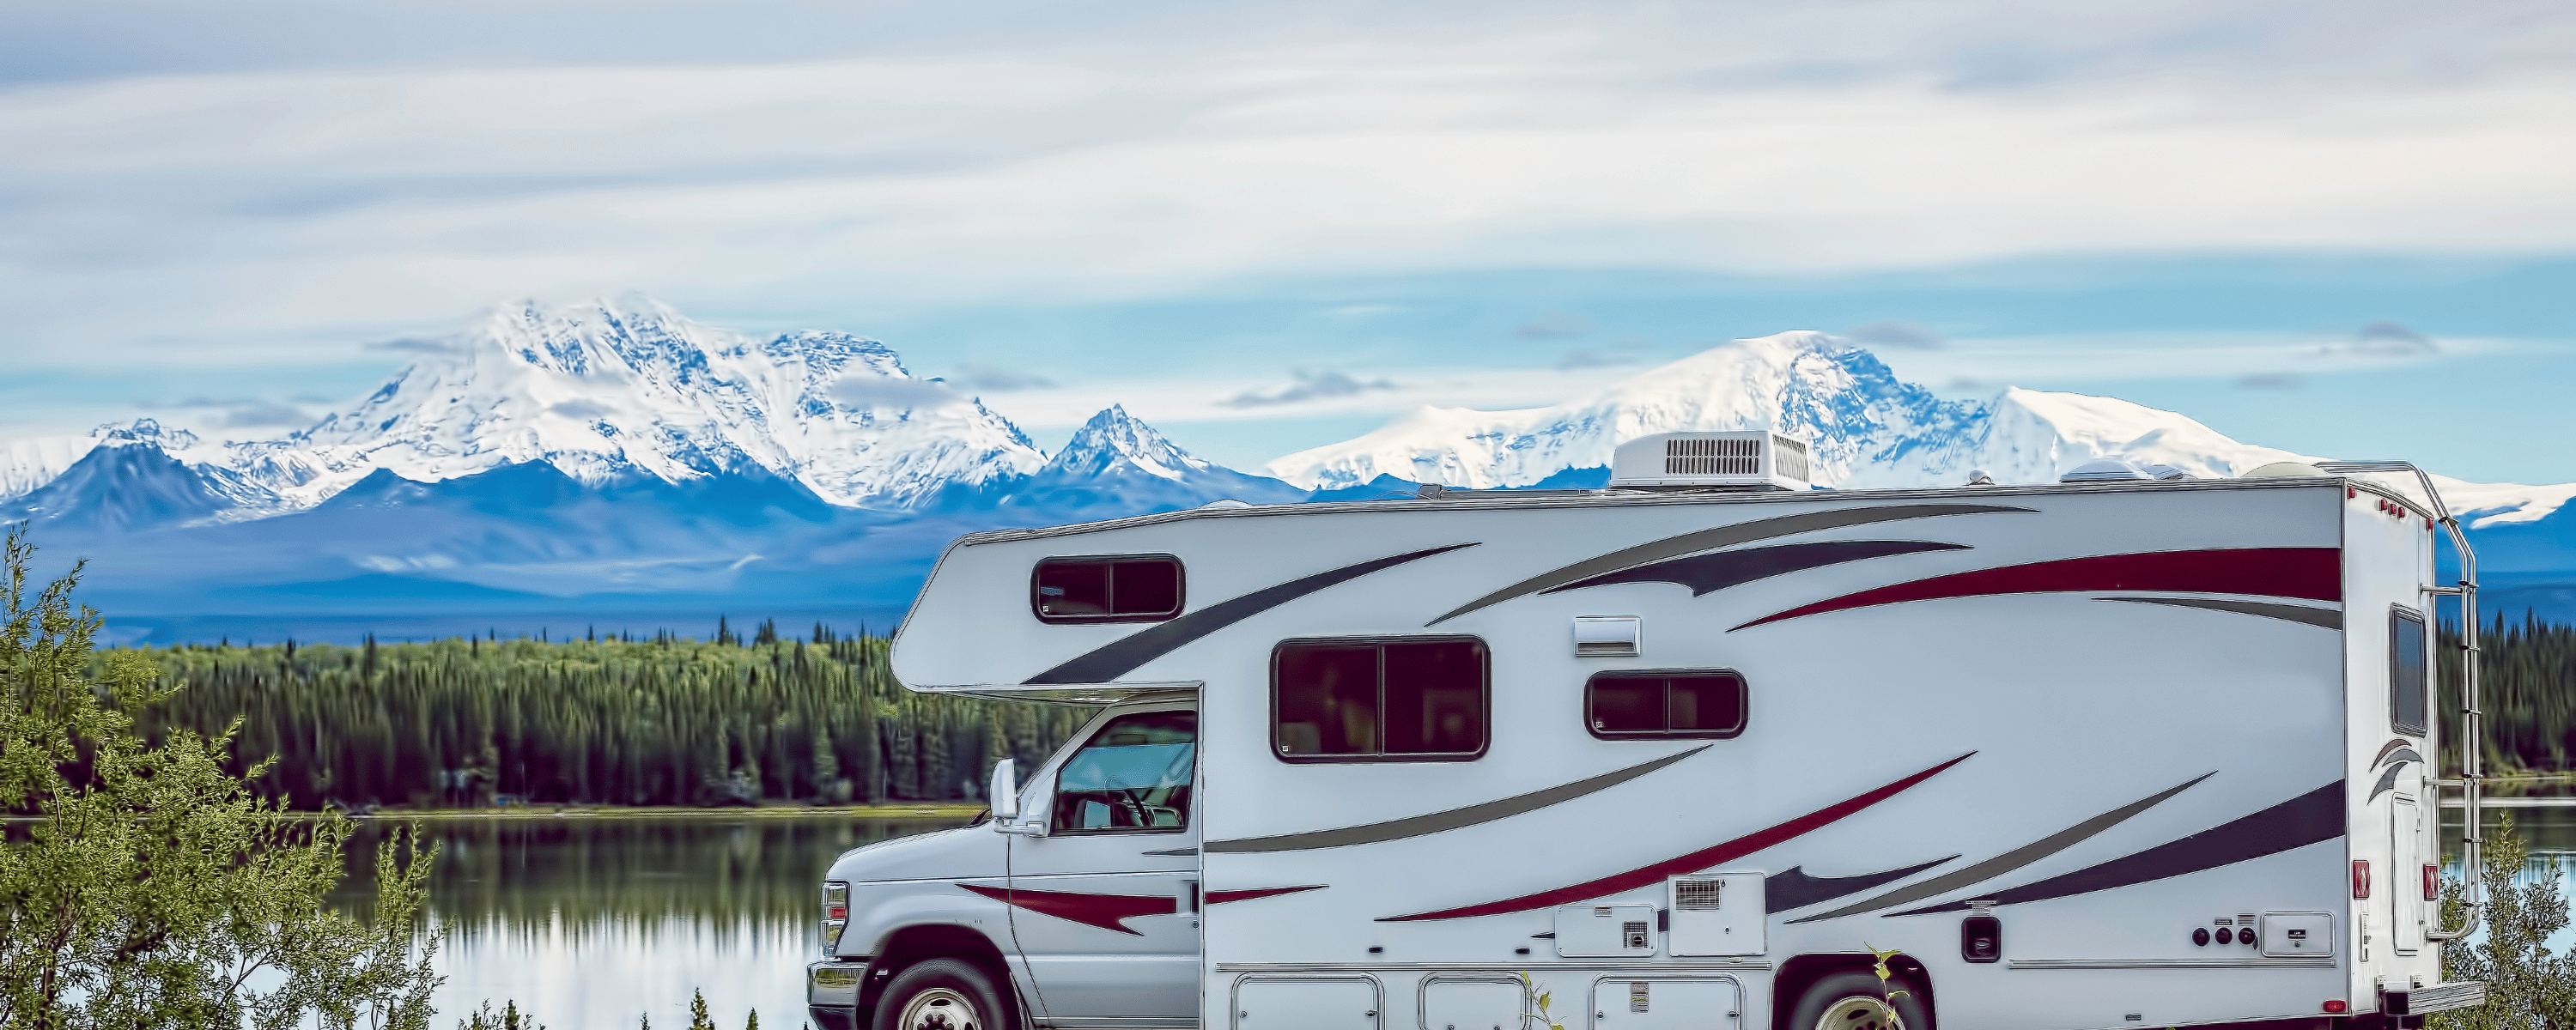 10 of the Best Alaska RV Parks